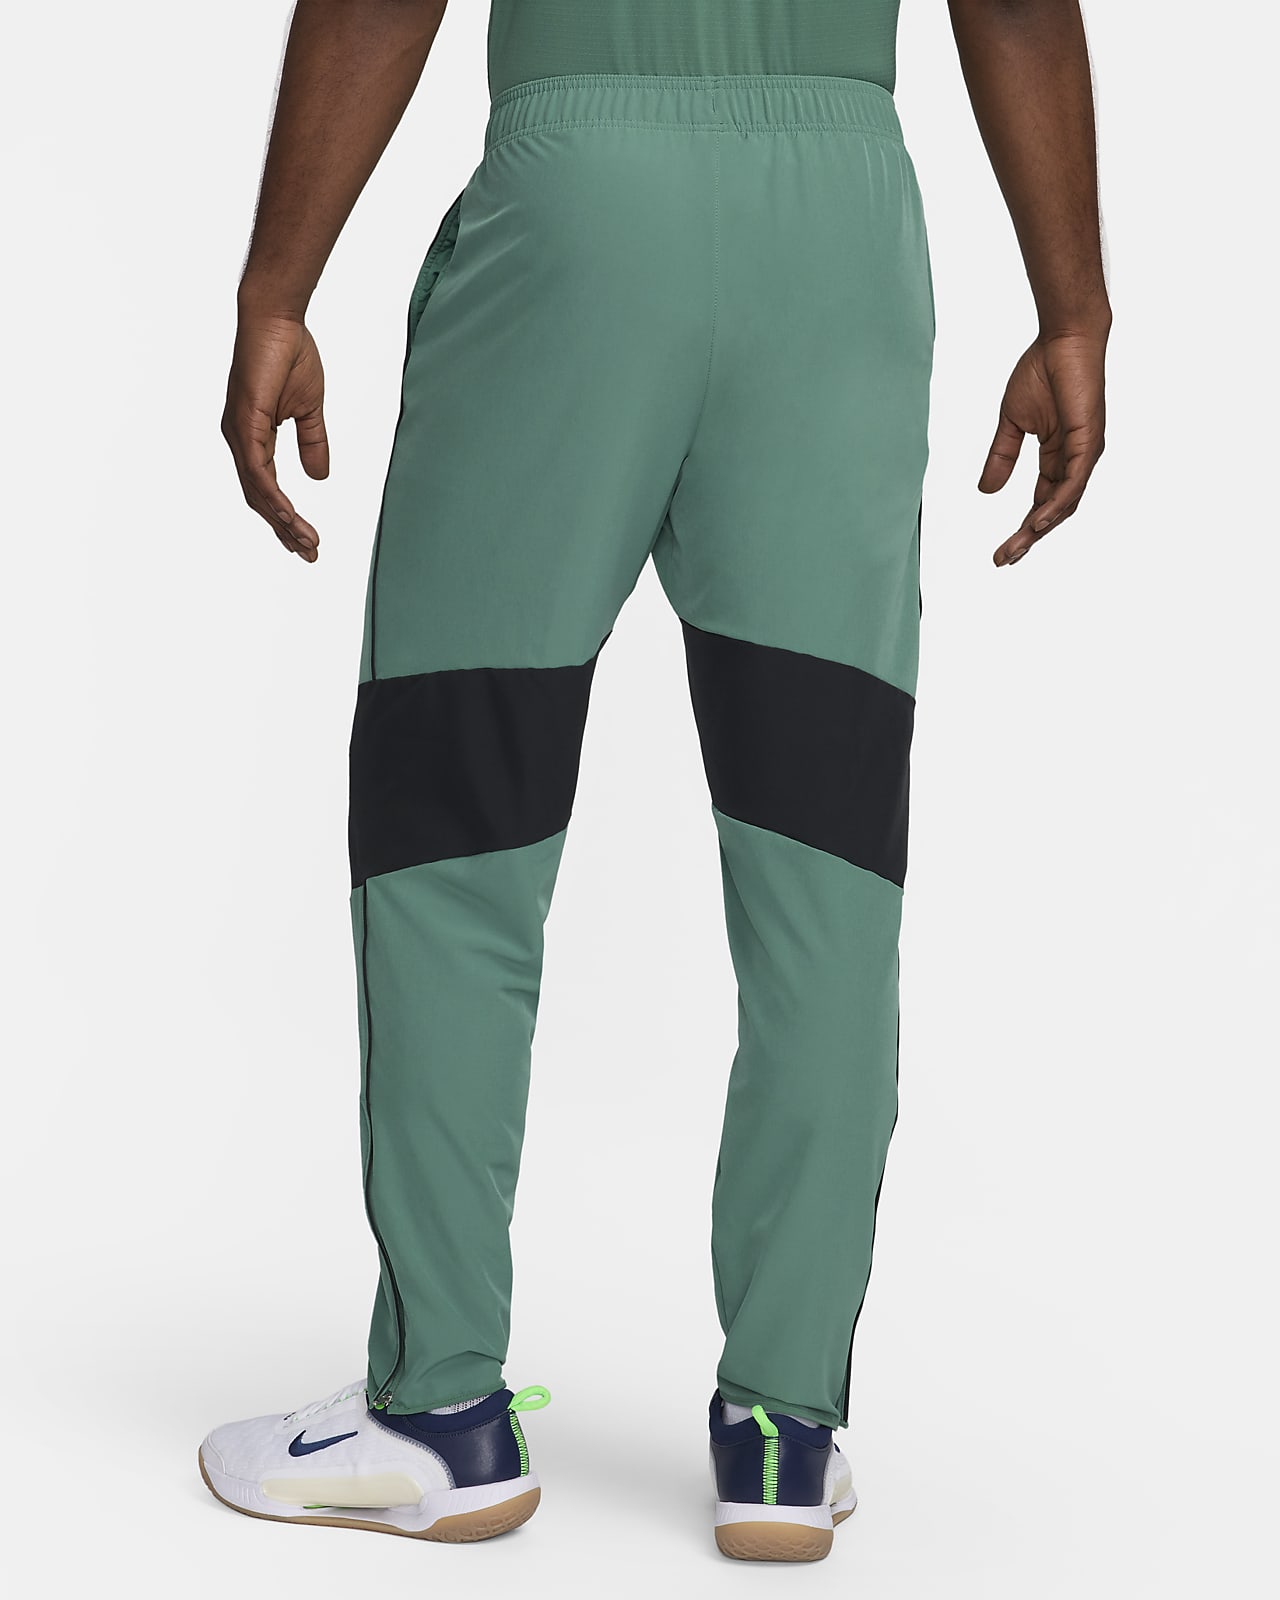 NikeCourt Men's Tennis Pants DC0621-415